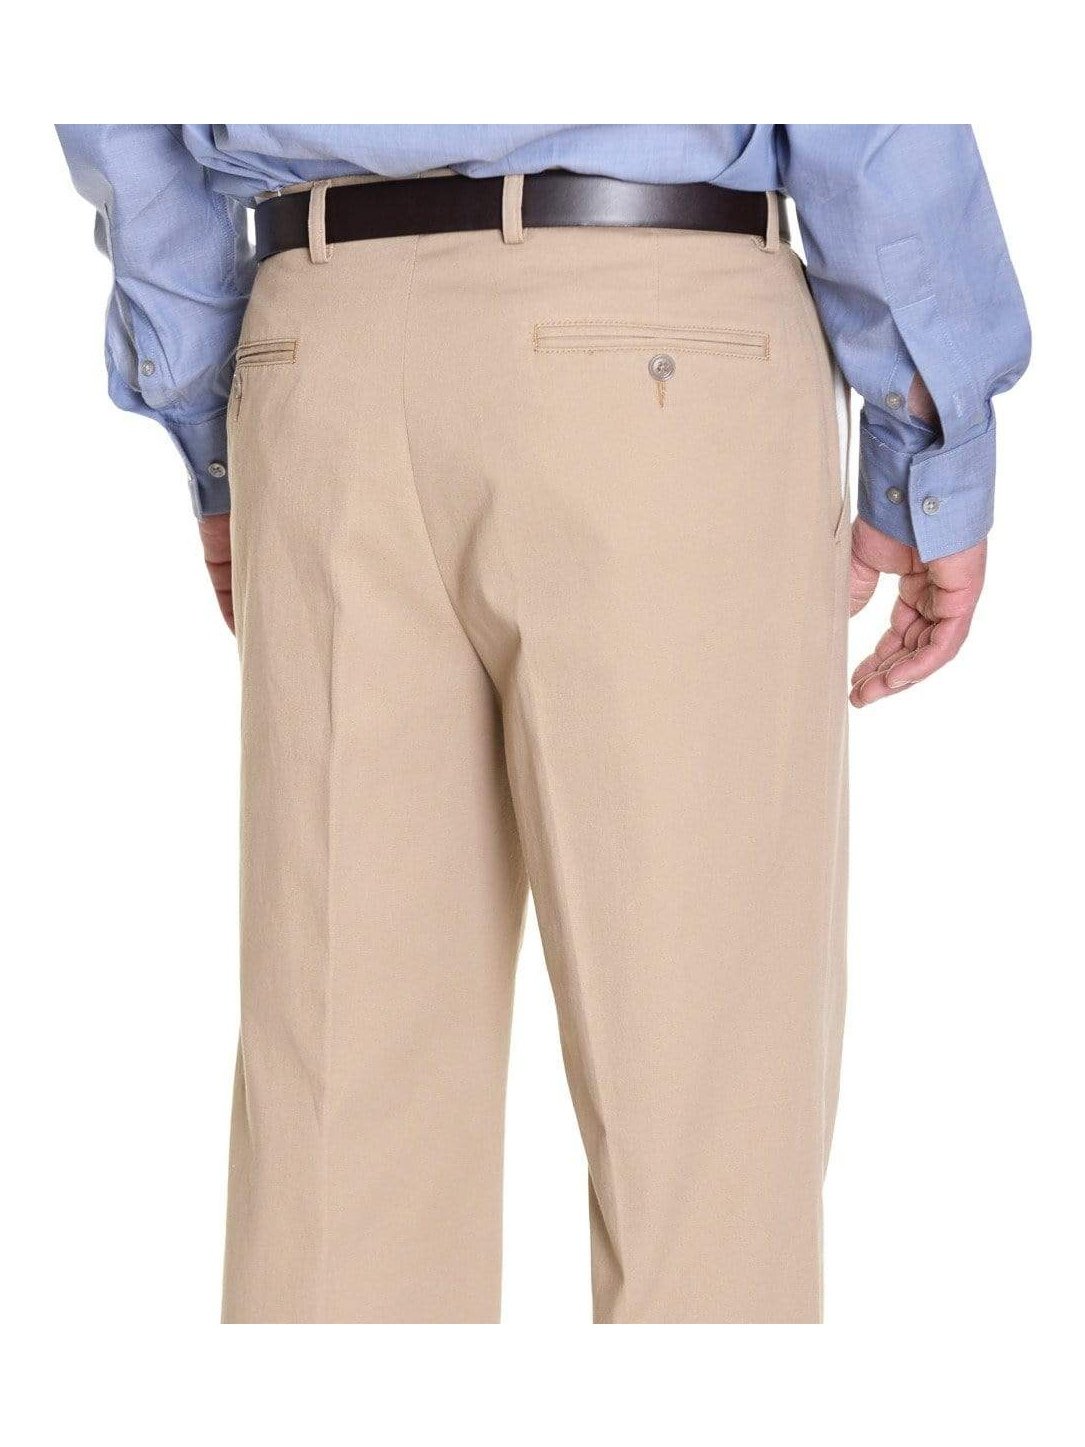 Mens Slim Fit Cotton Stretch Chino Pants 2 Packs - Walmart.com